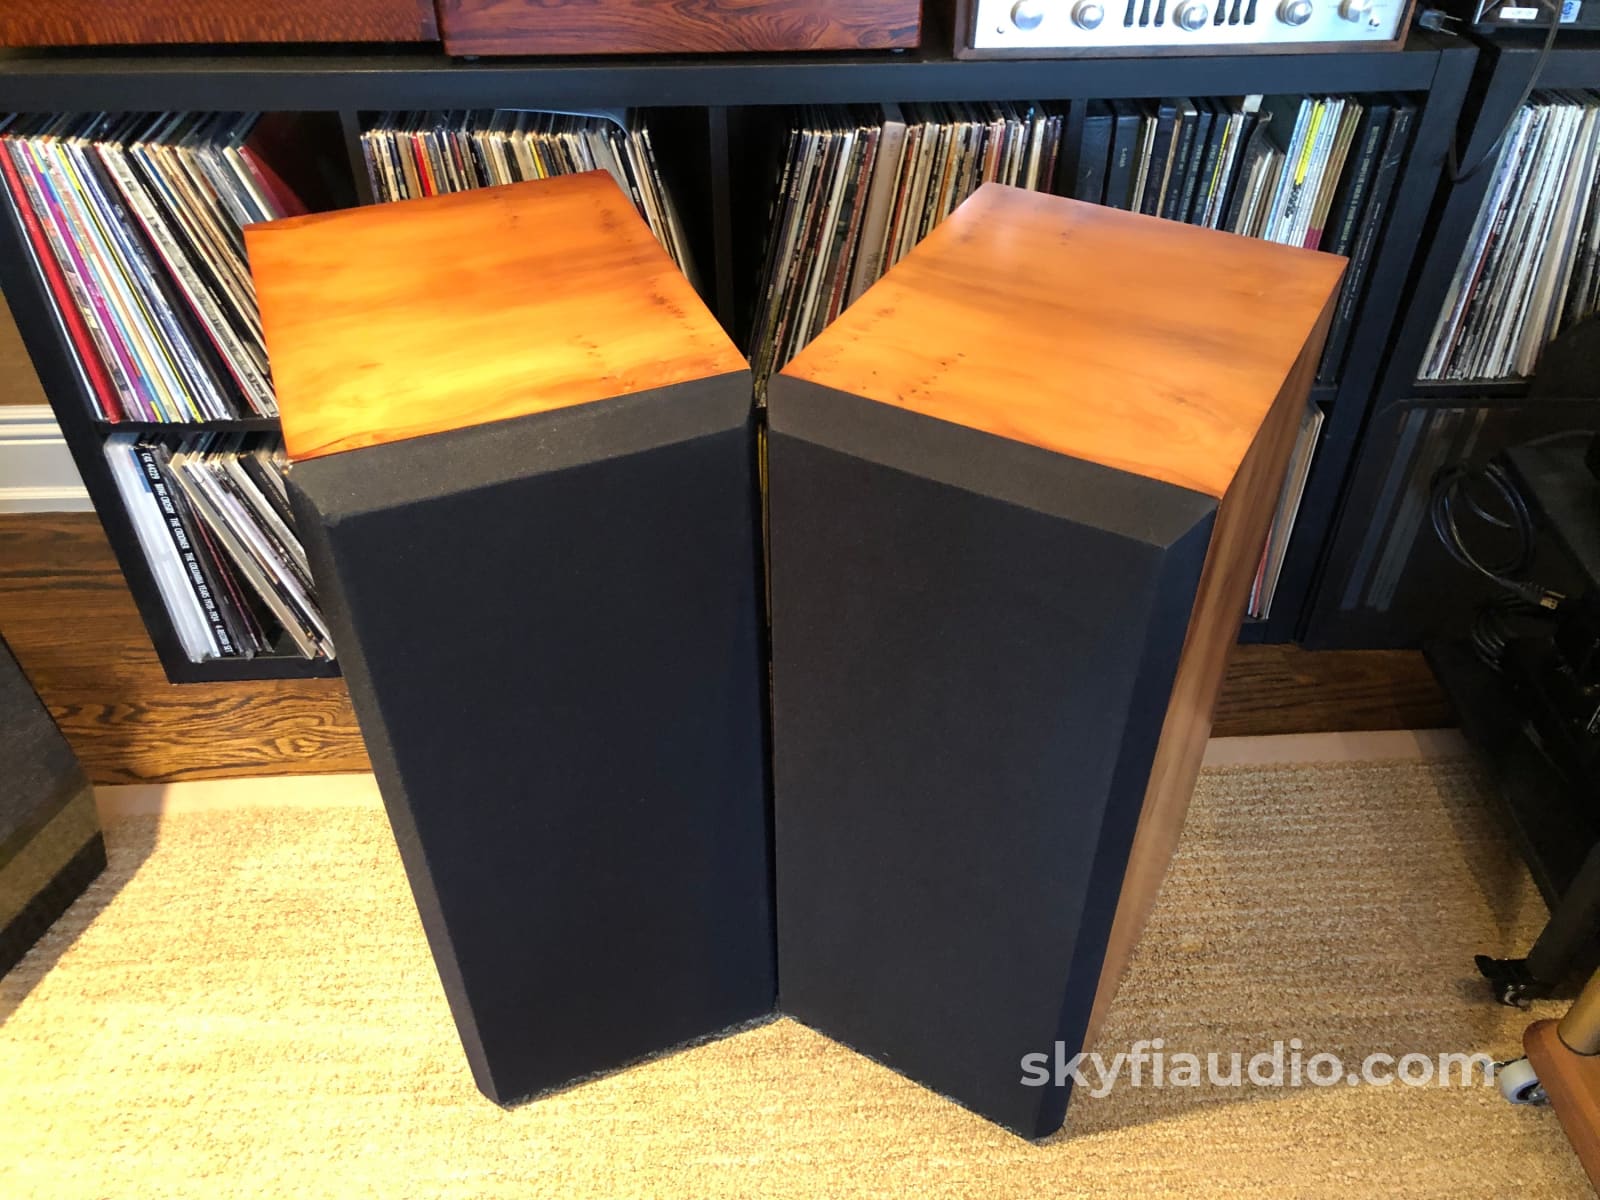 Atc Scm50 Asl Powered Studio Speakers In Rare Finish